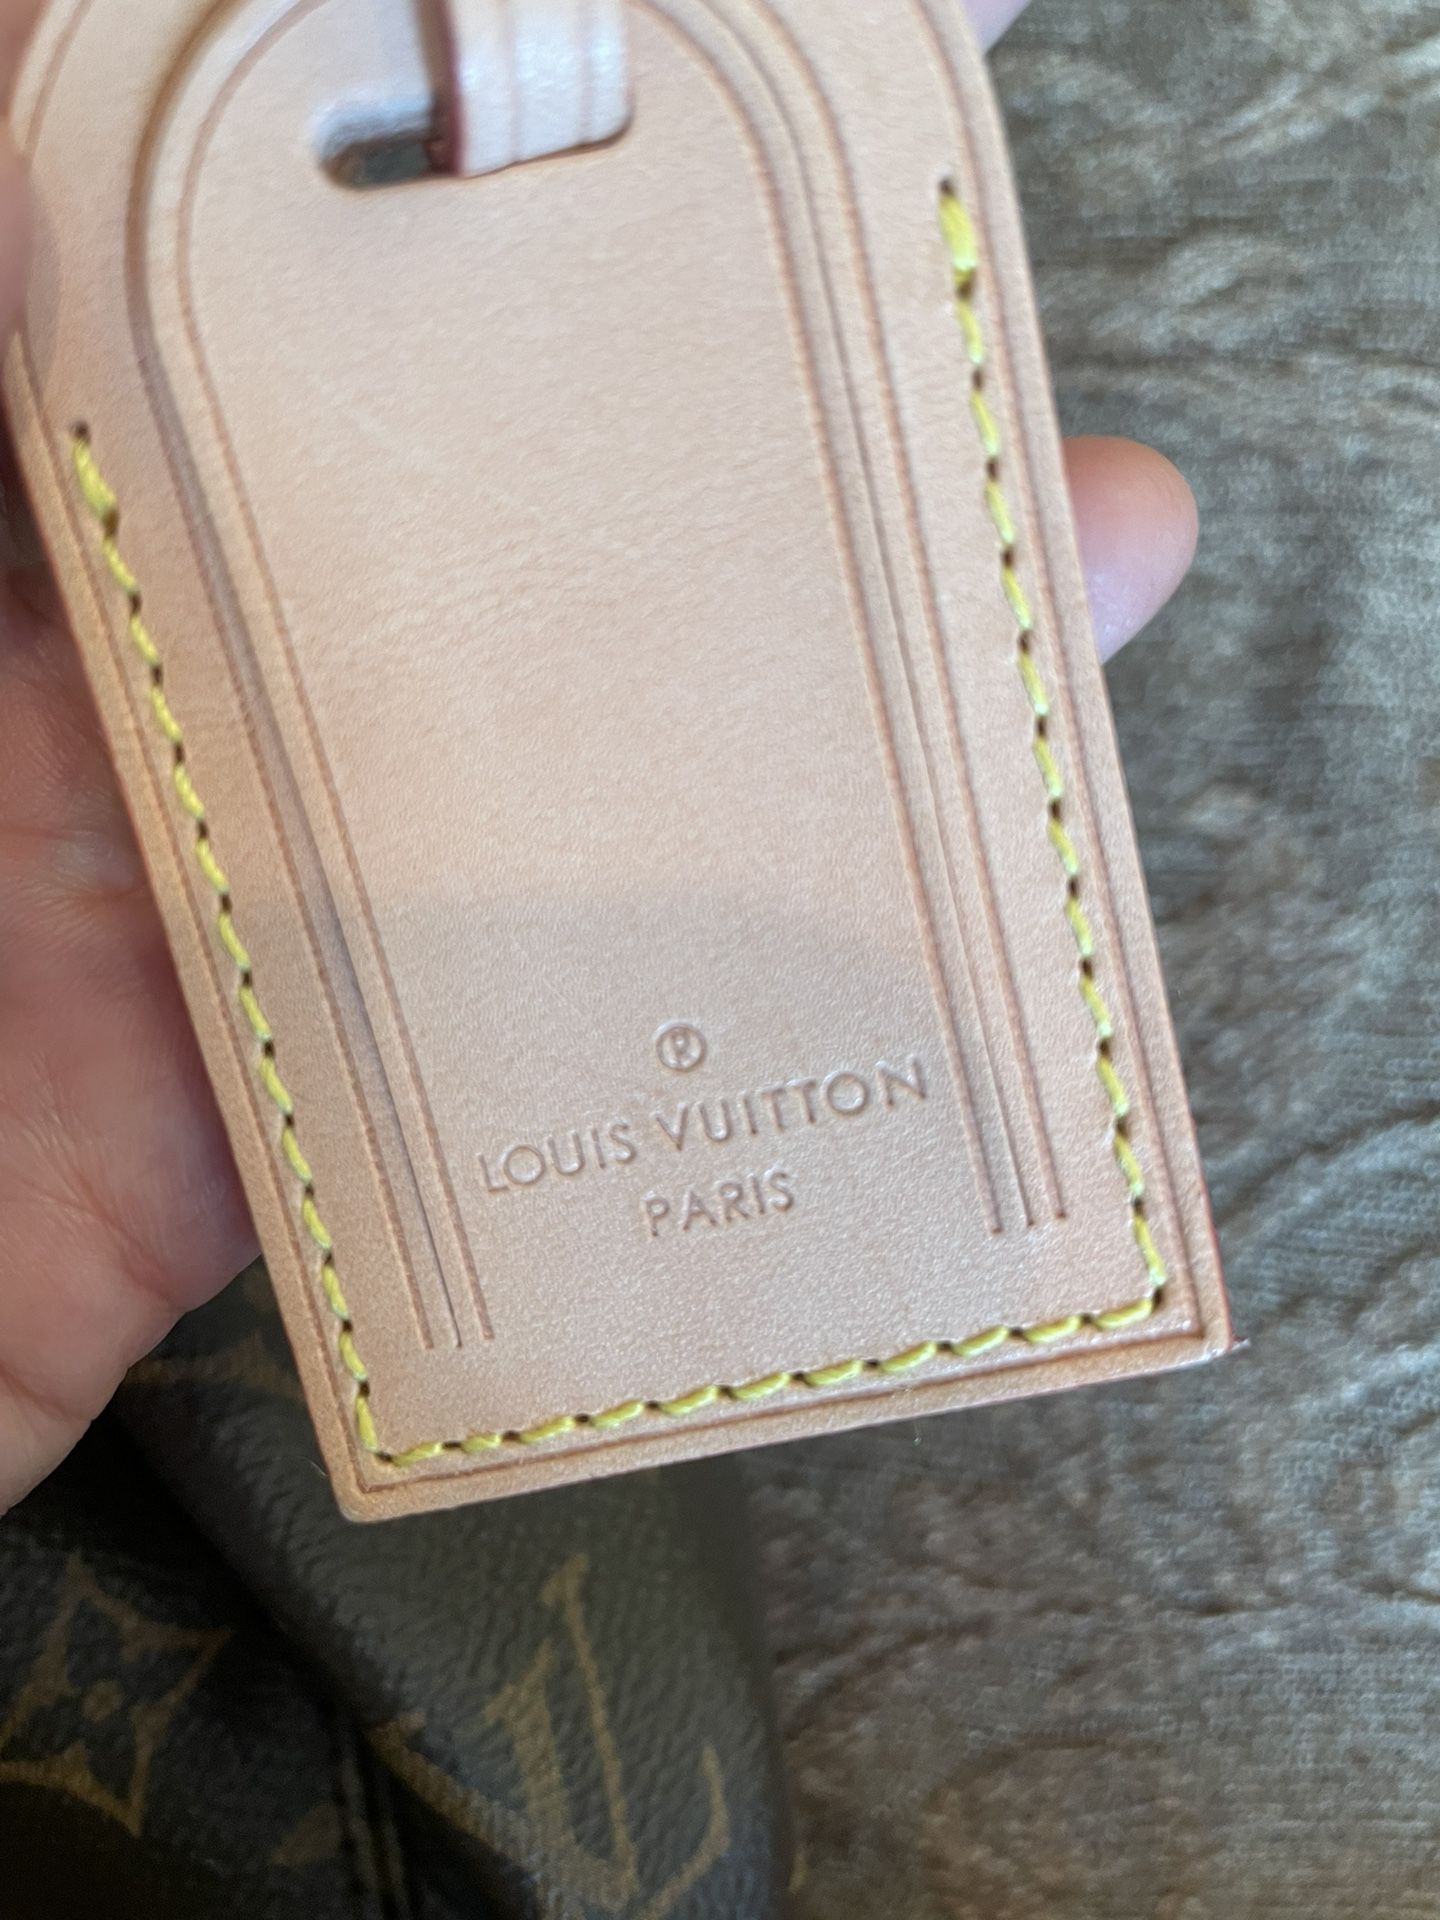 Louis Vuitton Bag for Sale in Santa Clara, CA - OfferUp